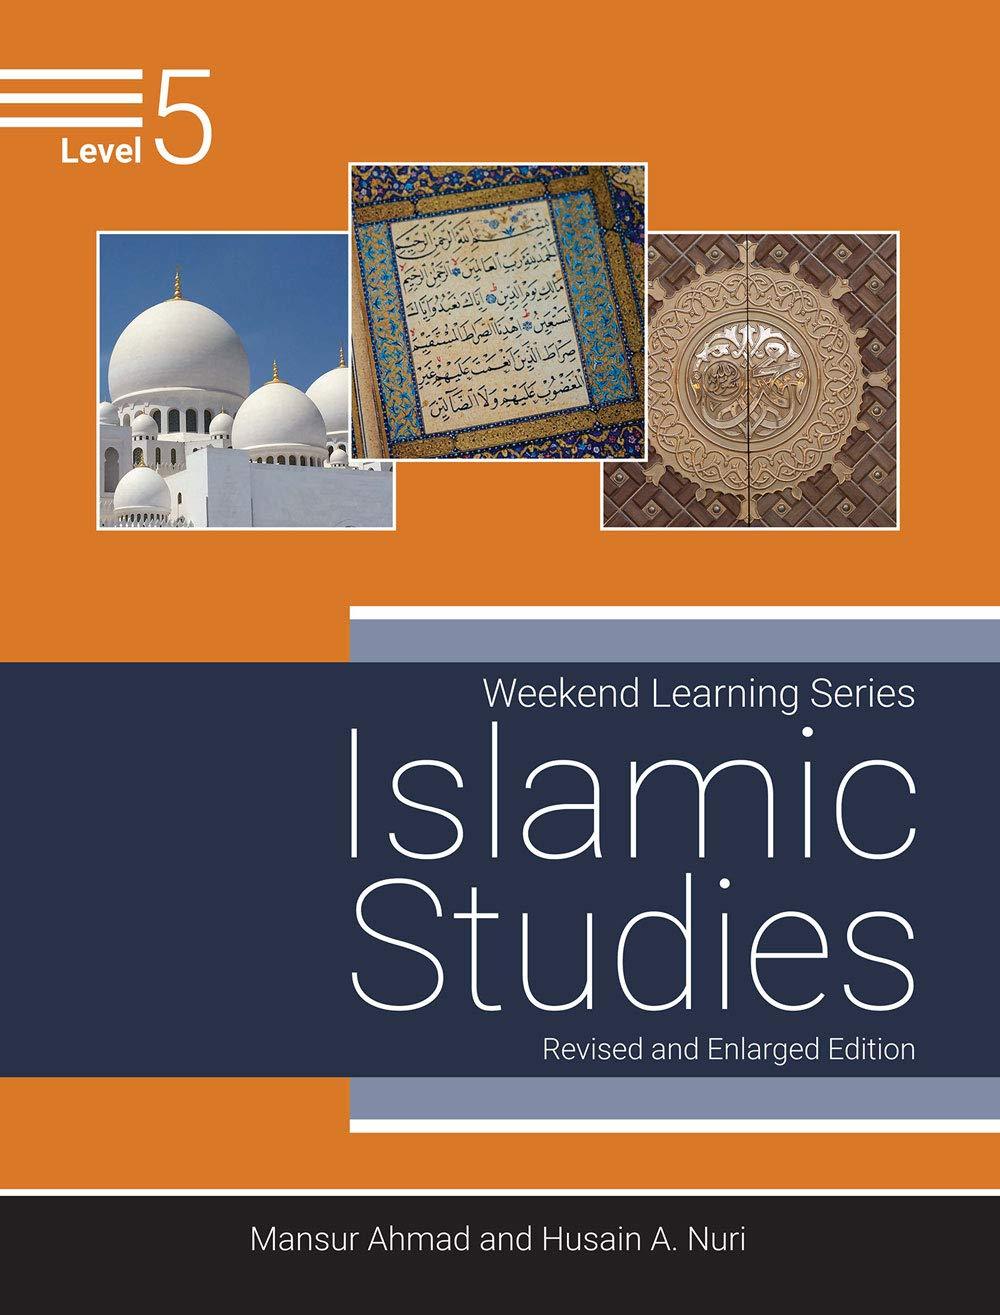 hec thesis list of islamic studies